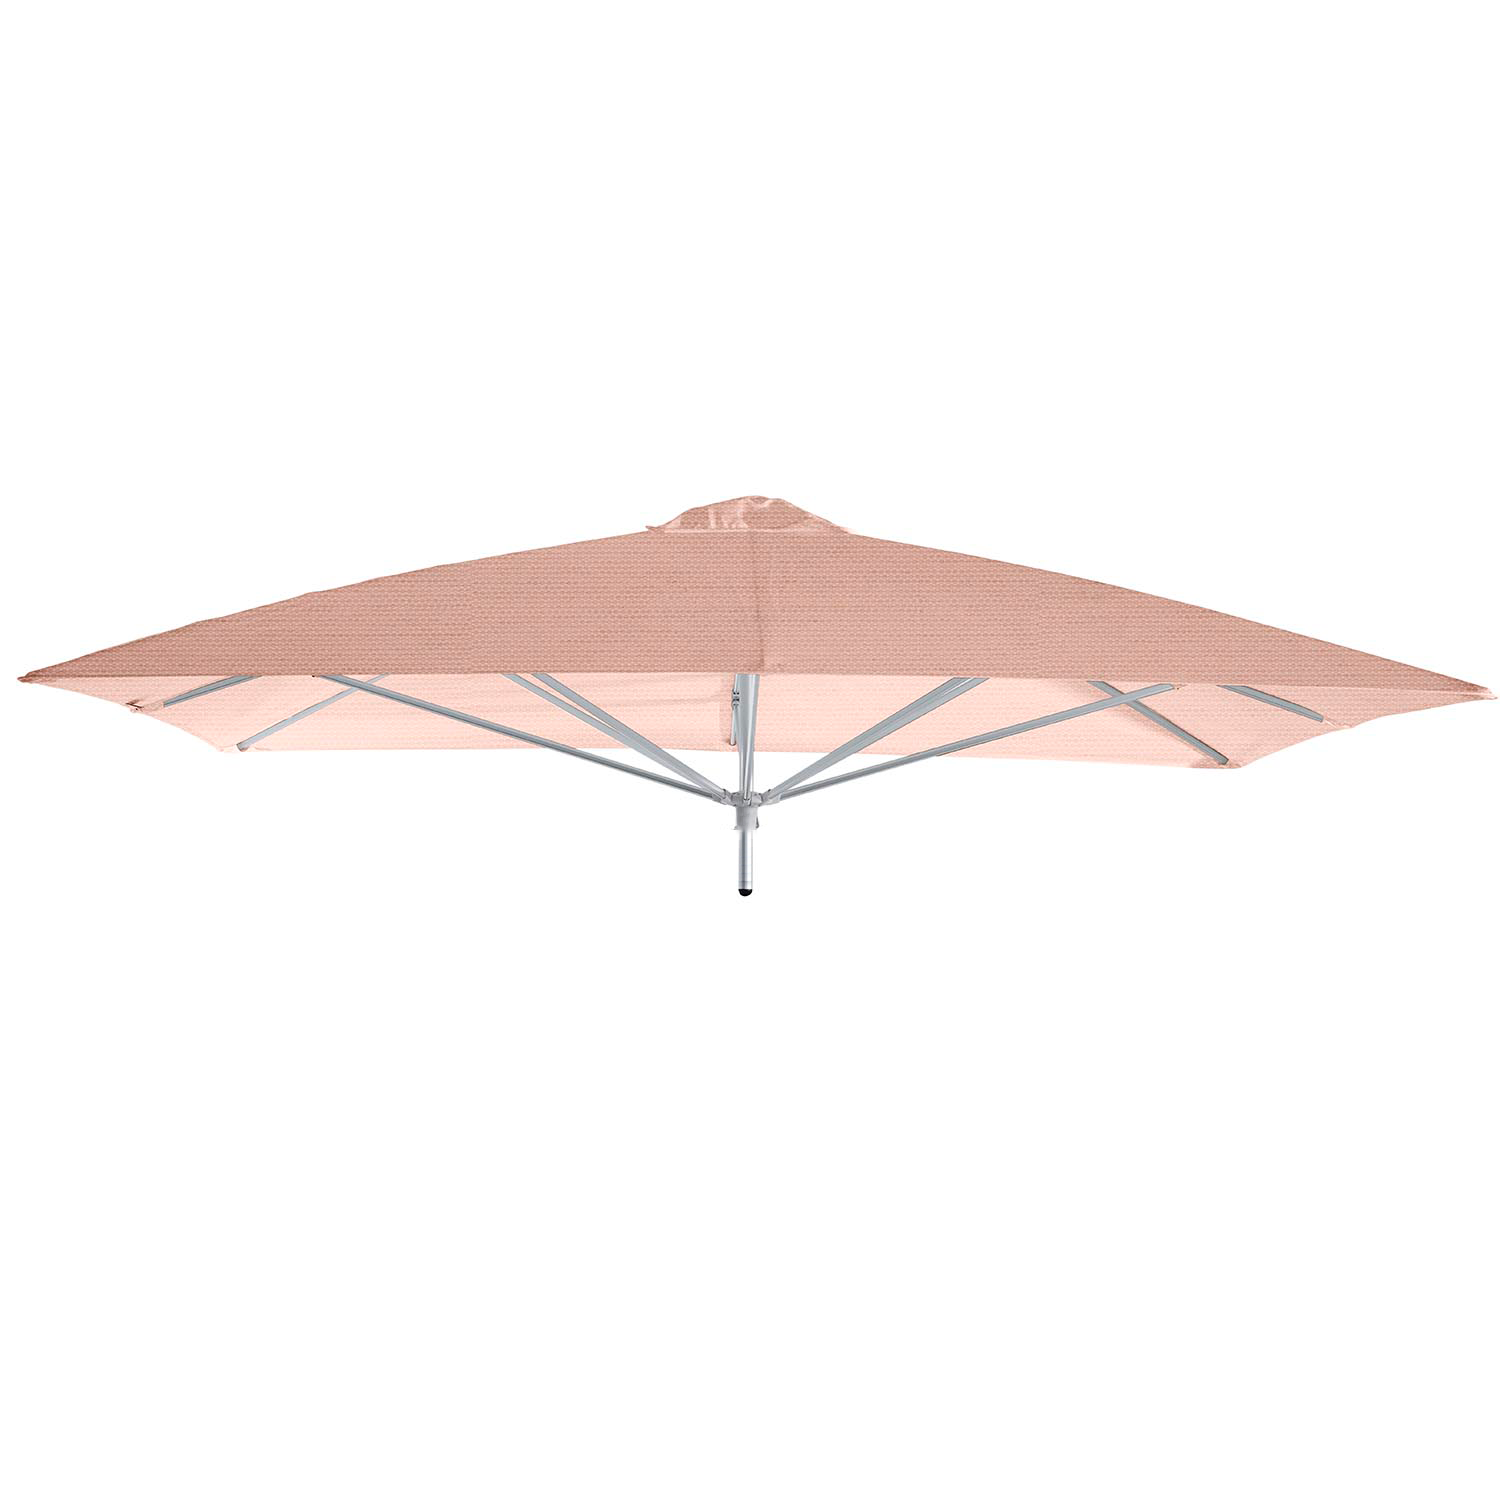 Paraflex Classic parasolkap 190x190cm - Sunbrella (Blush) 